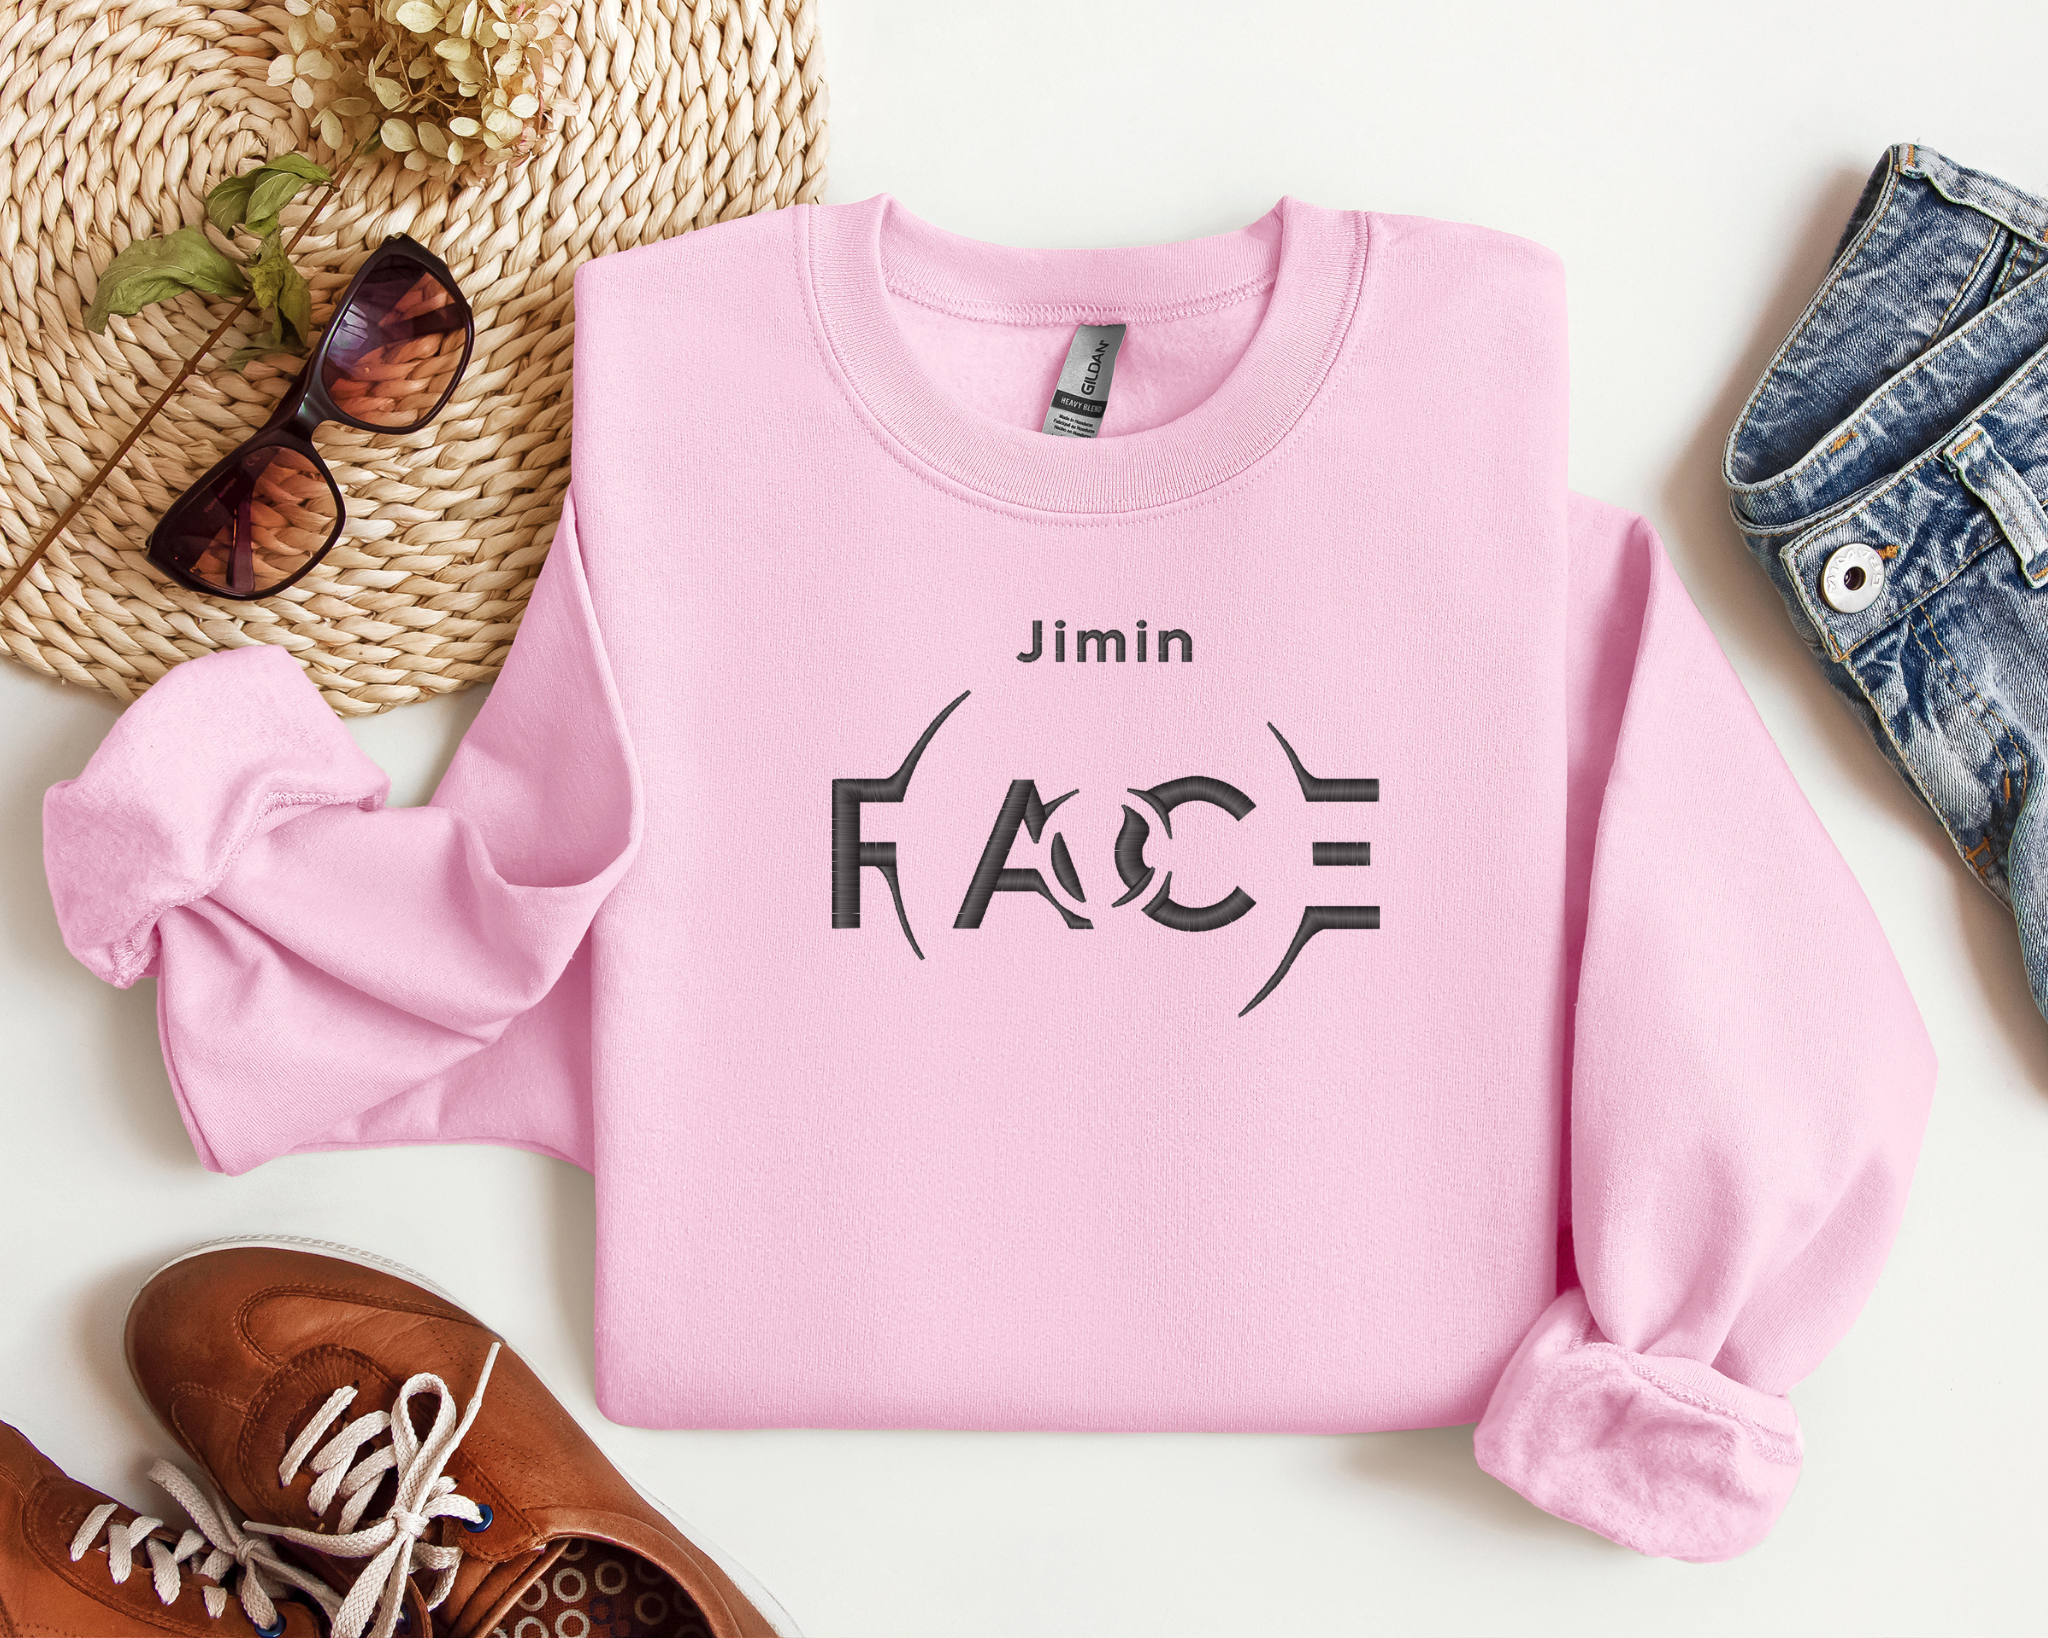 BTS Jimin Face Album Cover Sweatshirt